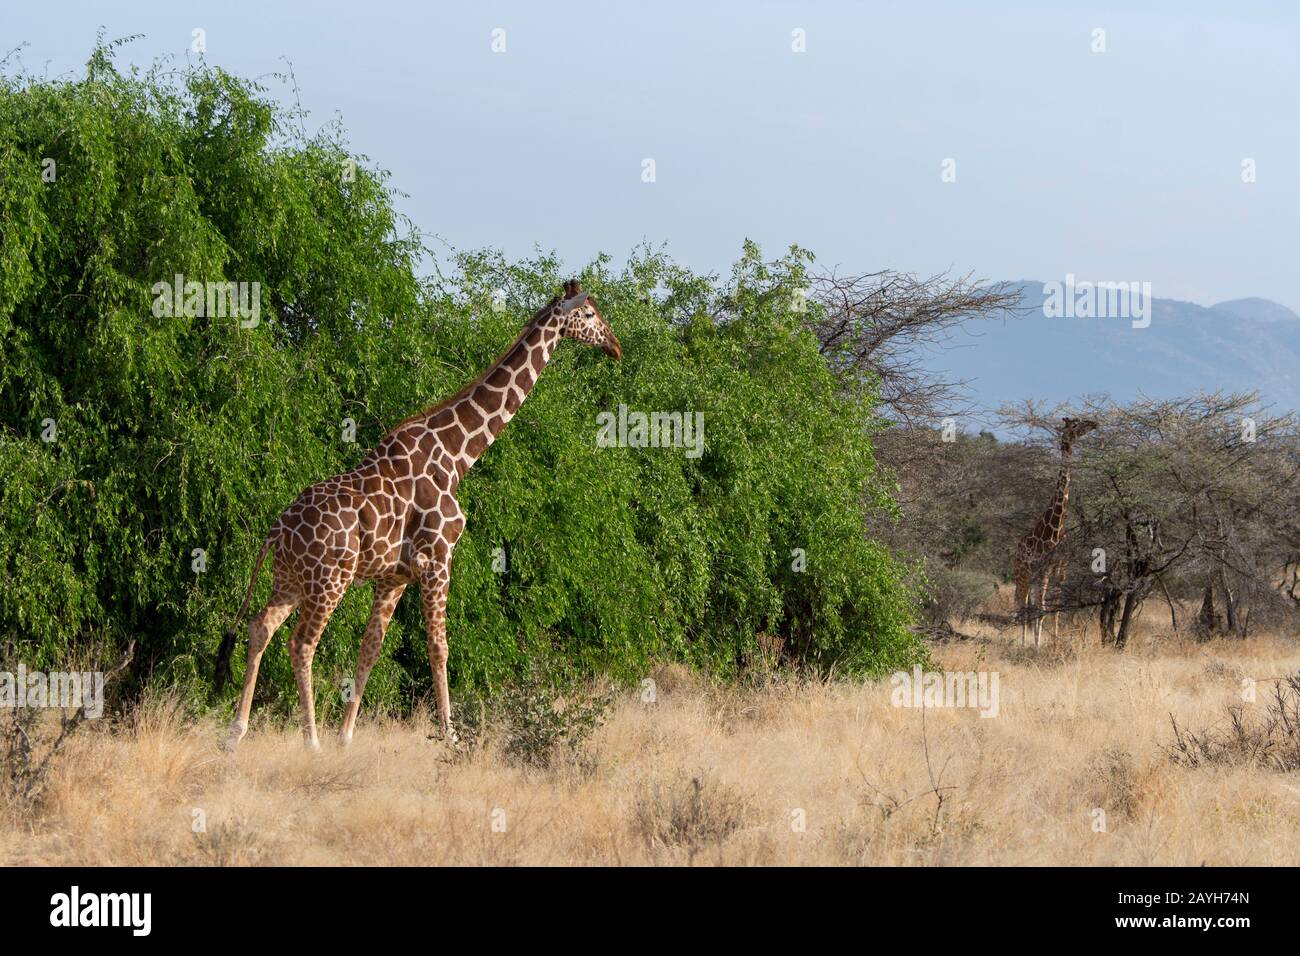 A reticulated giraffe (Giraffa reticulata) in the Samburu National Reserve in Kenya. Stock Photo